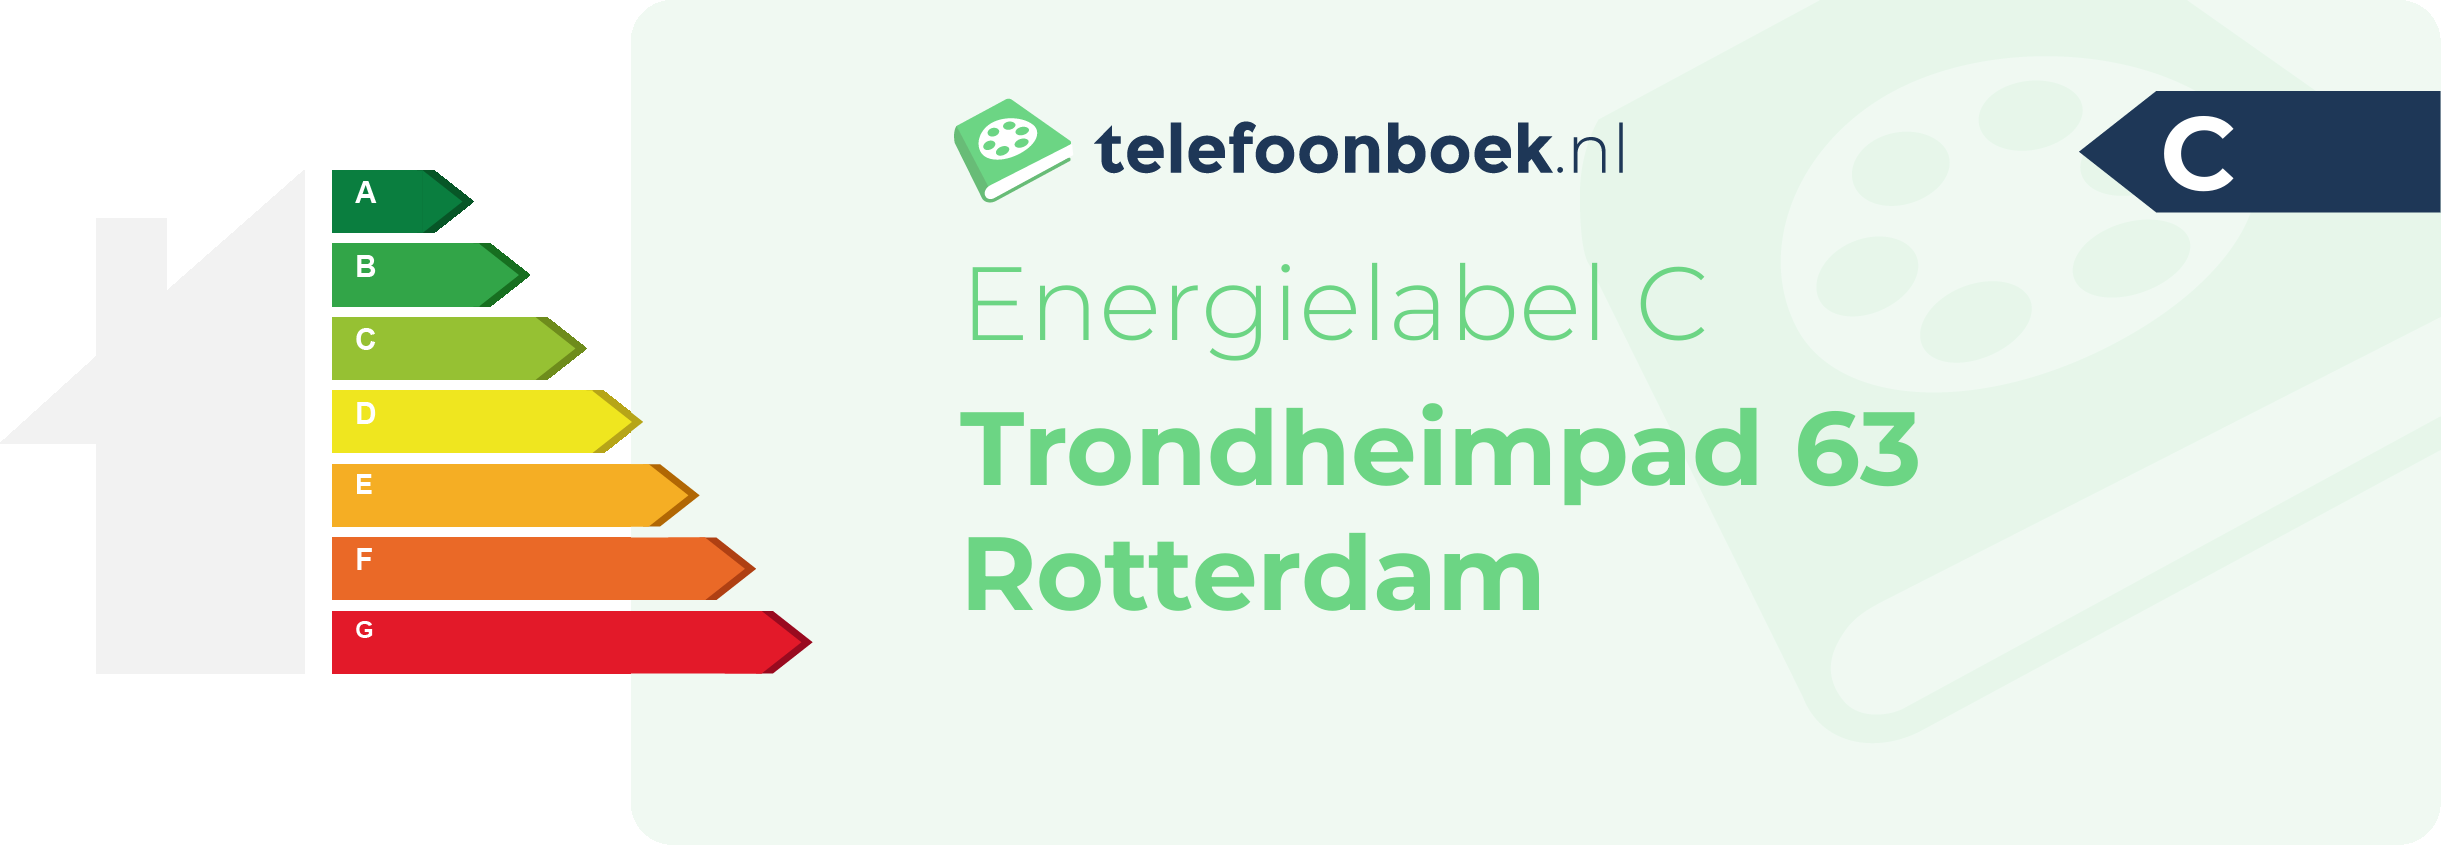 Energielabel Trondheimpad 63 Rotterdam